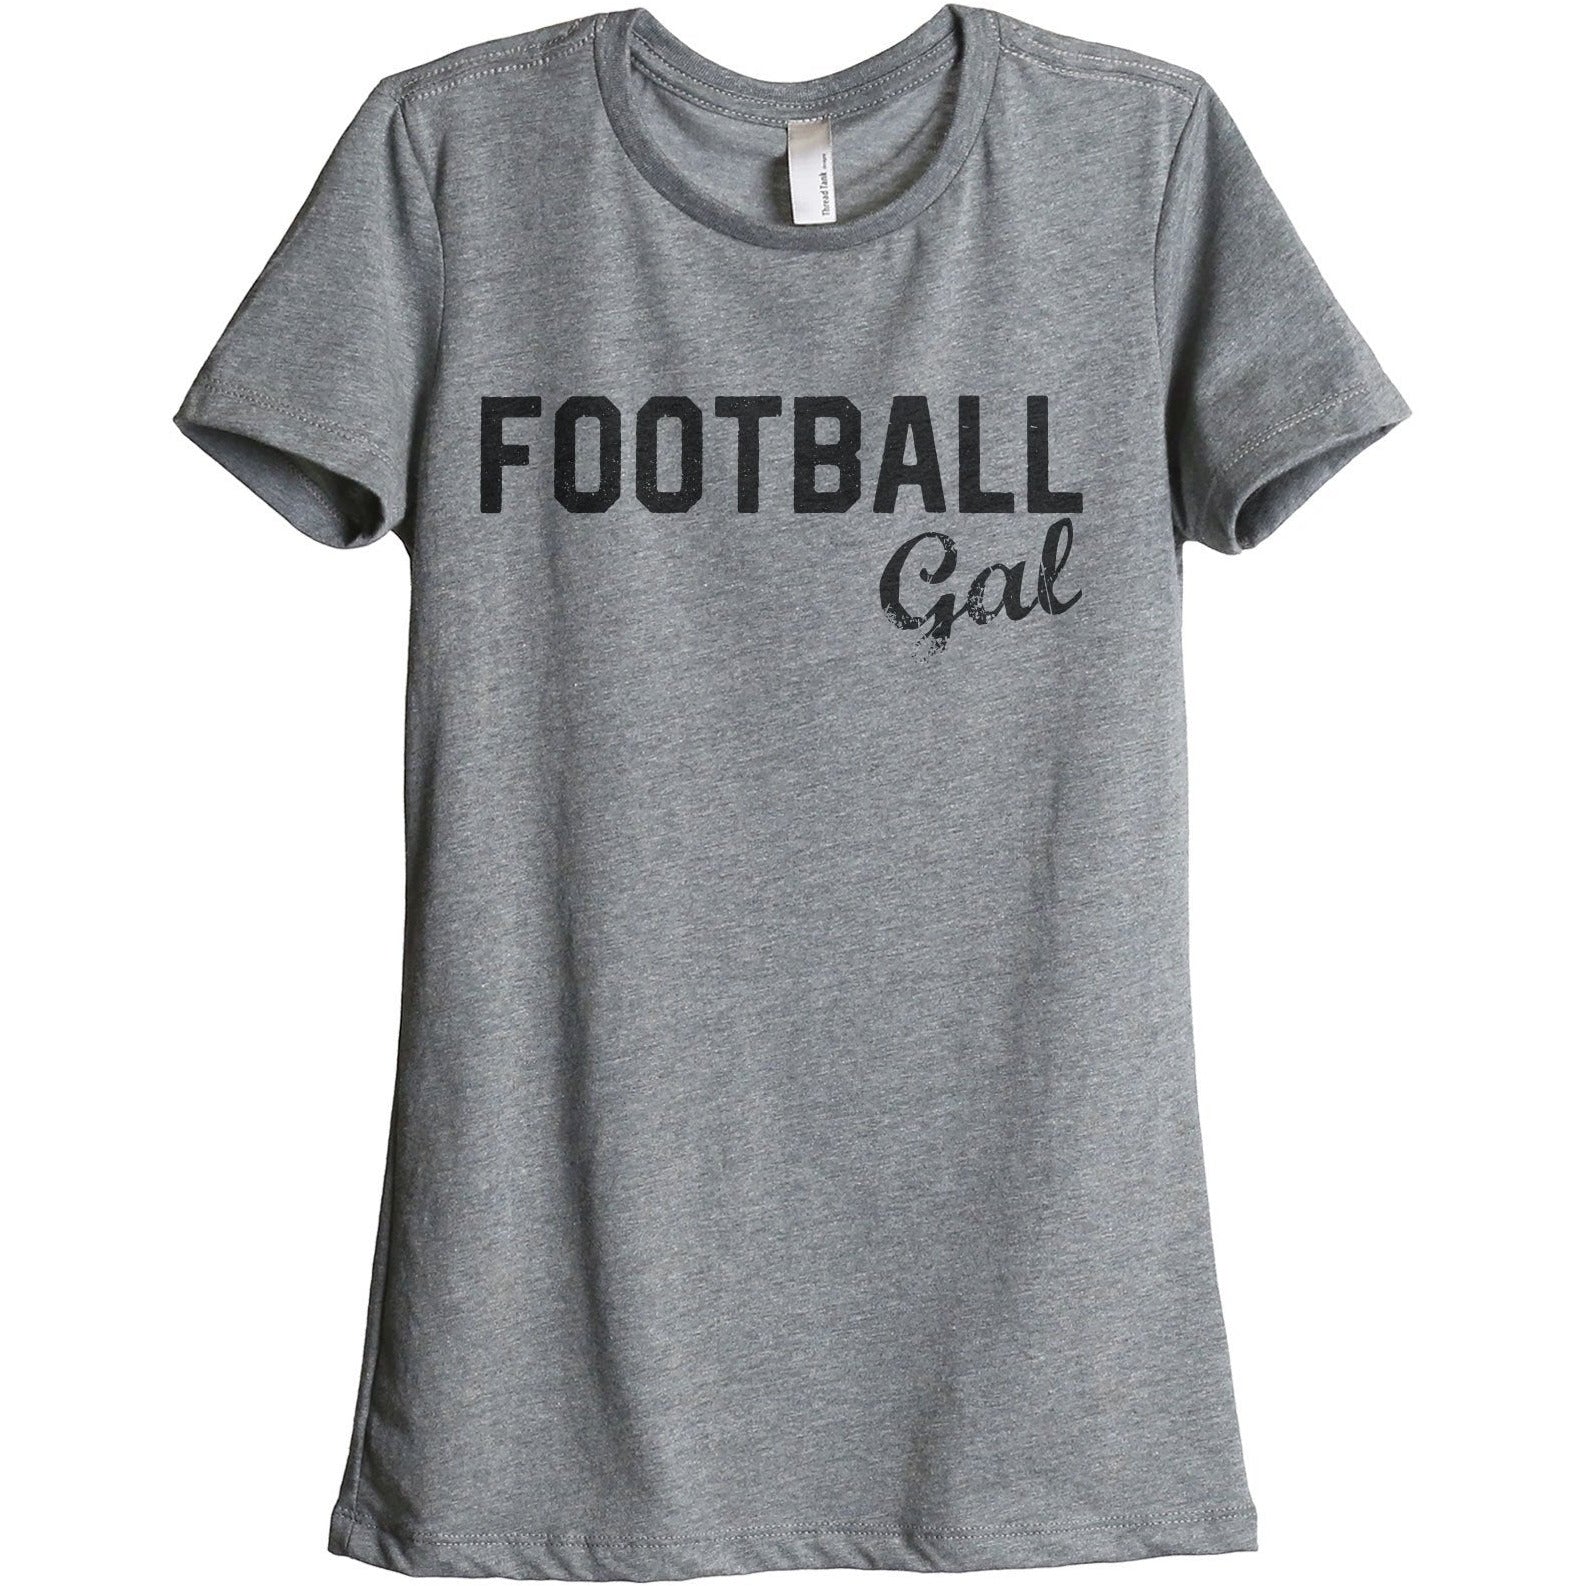 Football Gal Women's Relaxed Crewneck T-Shirt Top Tee Heather Grey